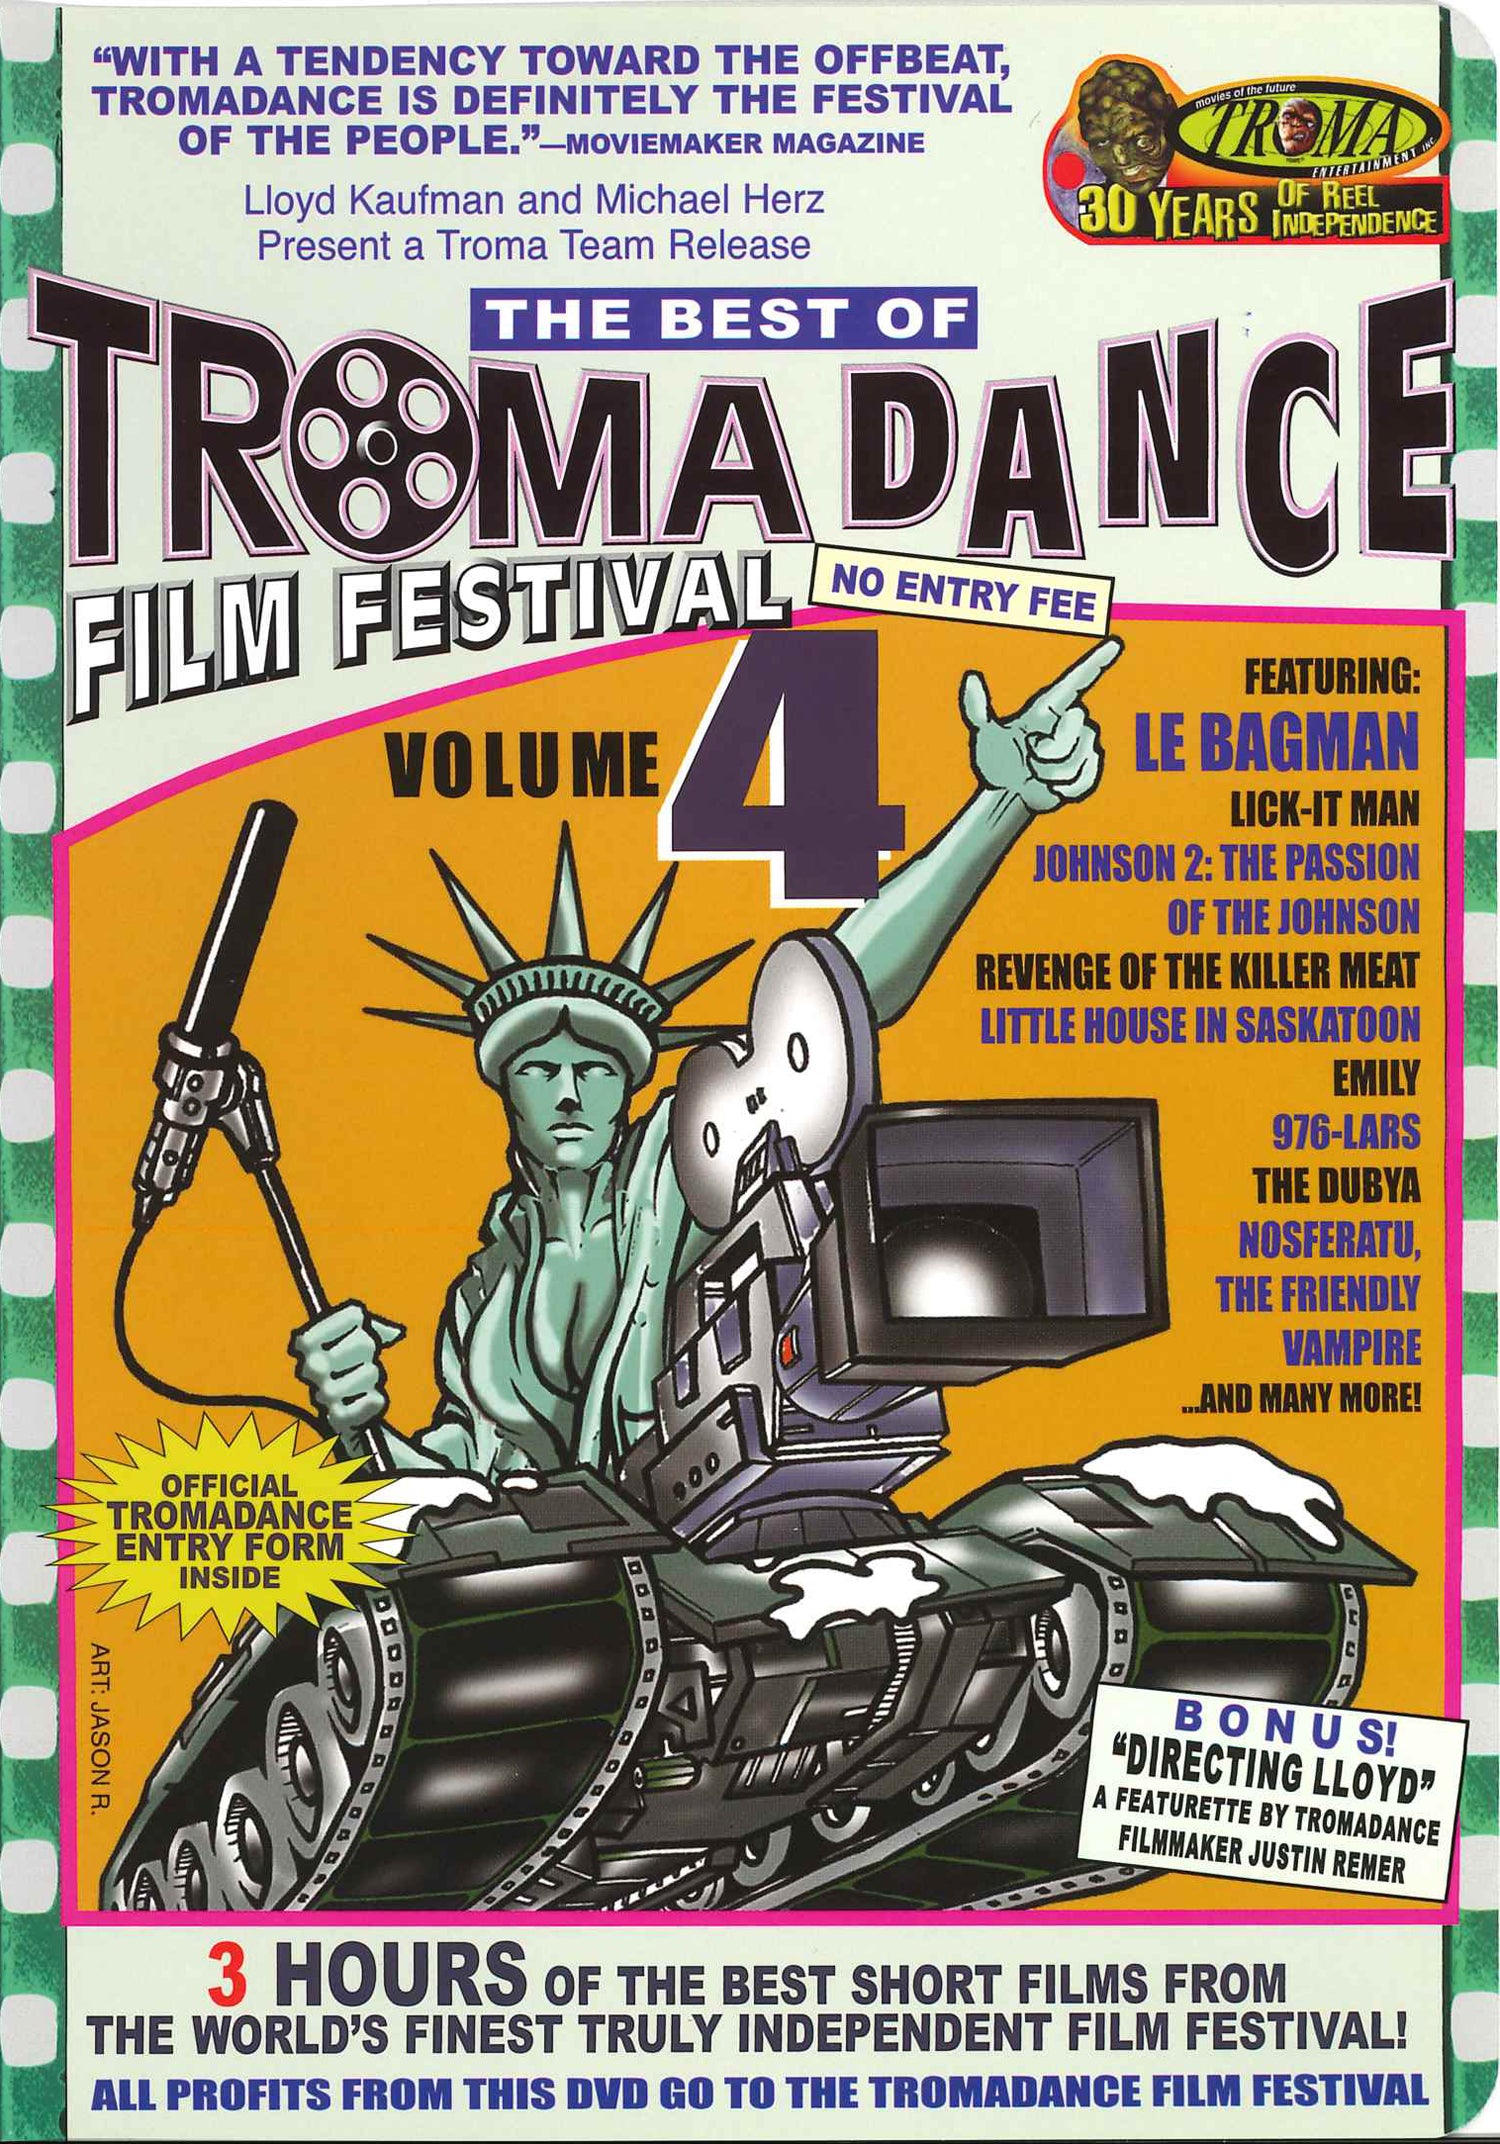 THE BEST OF TROMADANCE FILM FESTIVAL VOLUME 4 DVD